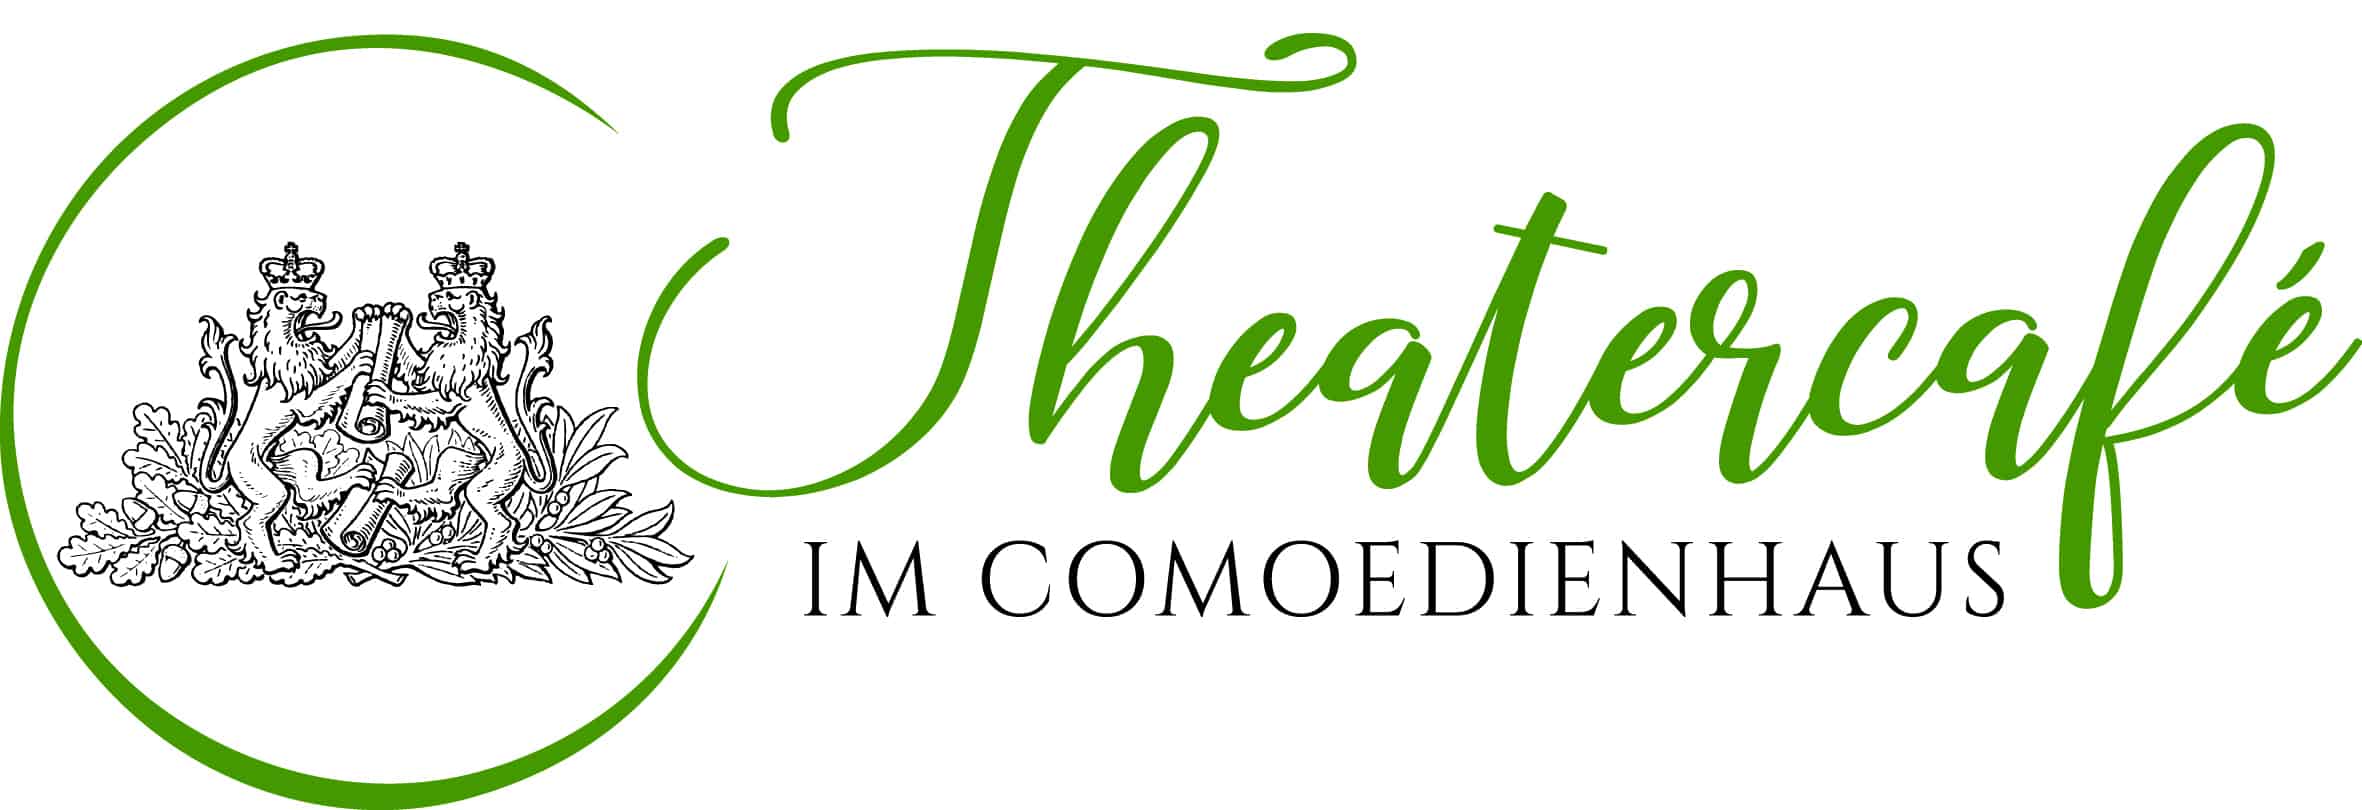 Theatercafe Im Comoedienhaus CMYK